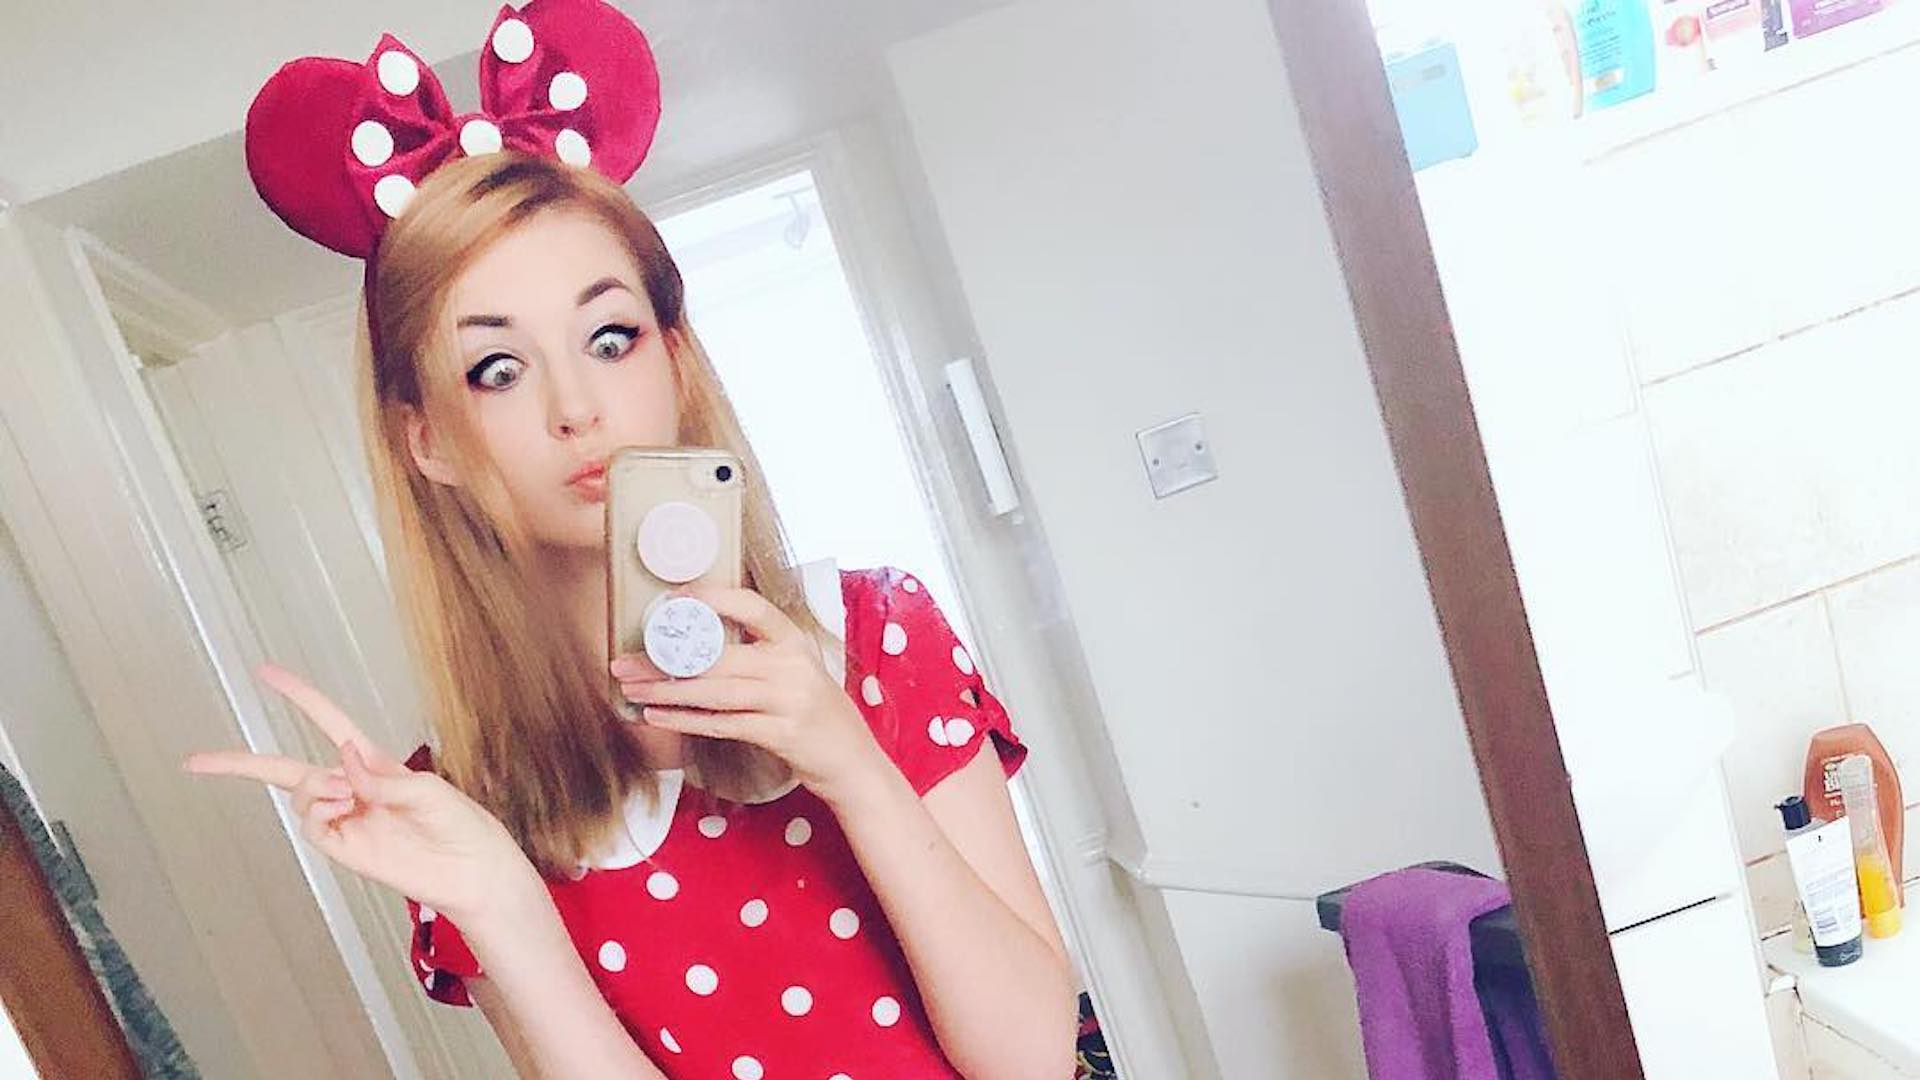 Connie Glynn taking a selfie dressed as Minnie Mouse